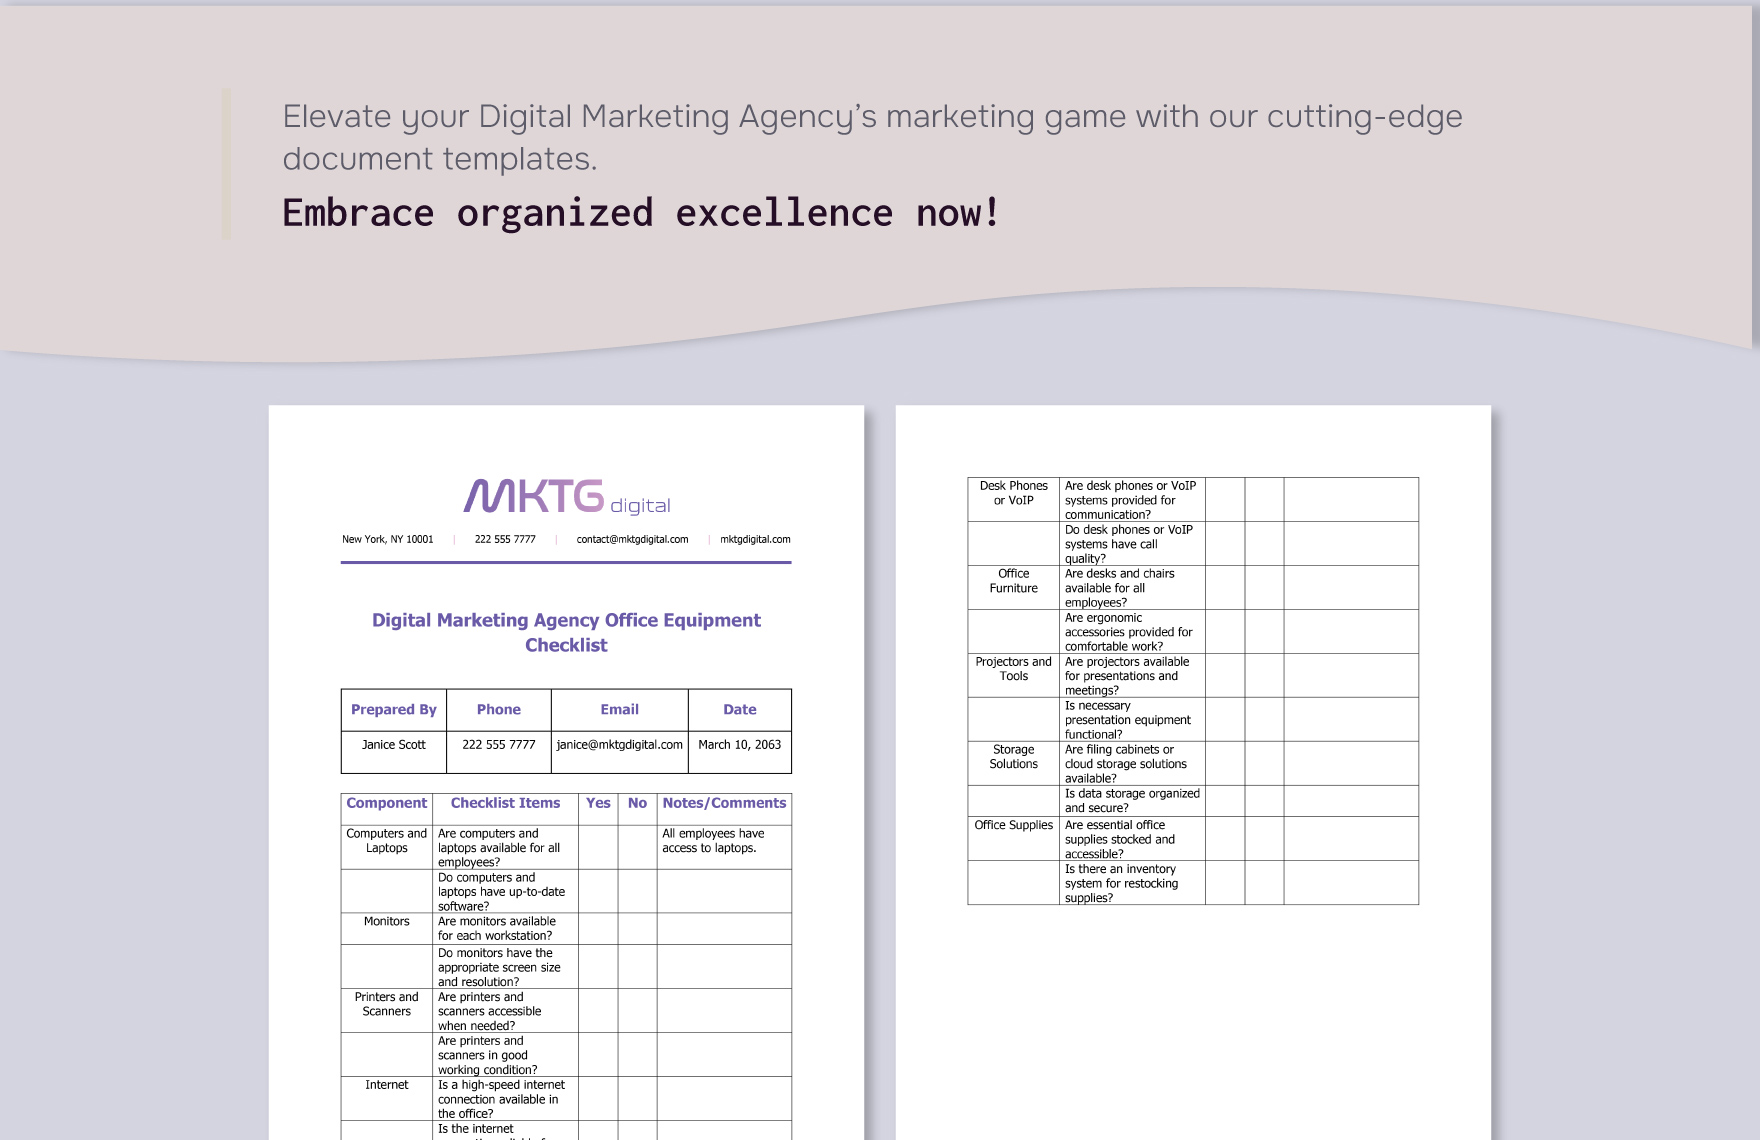 Digital Marketing Agency Office Equipment Checklist Template